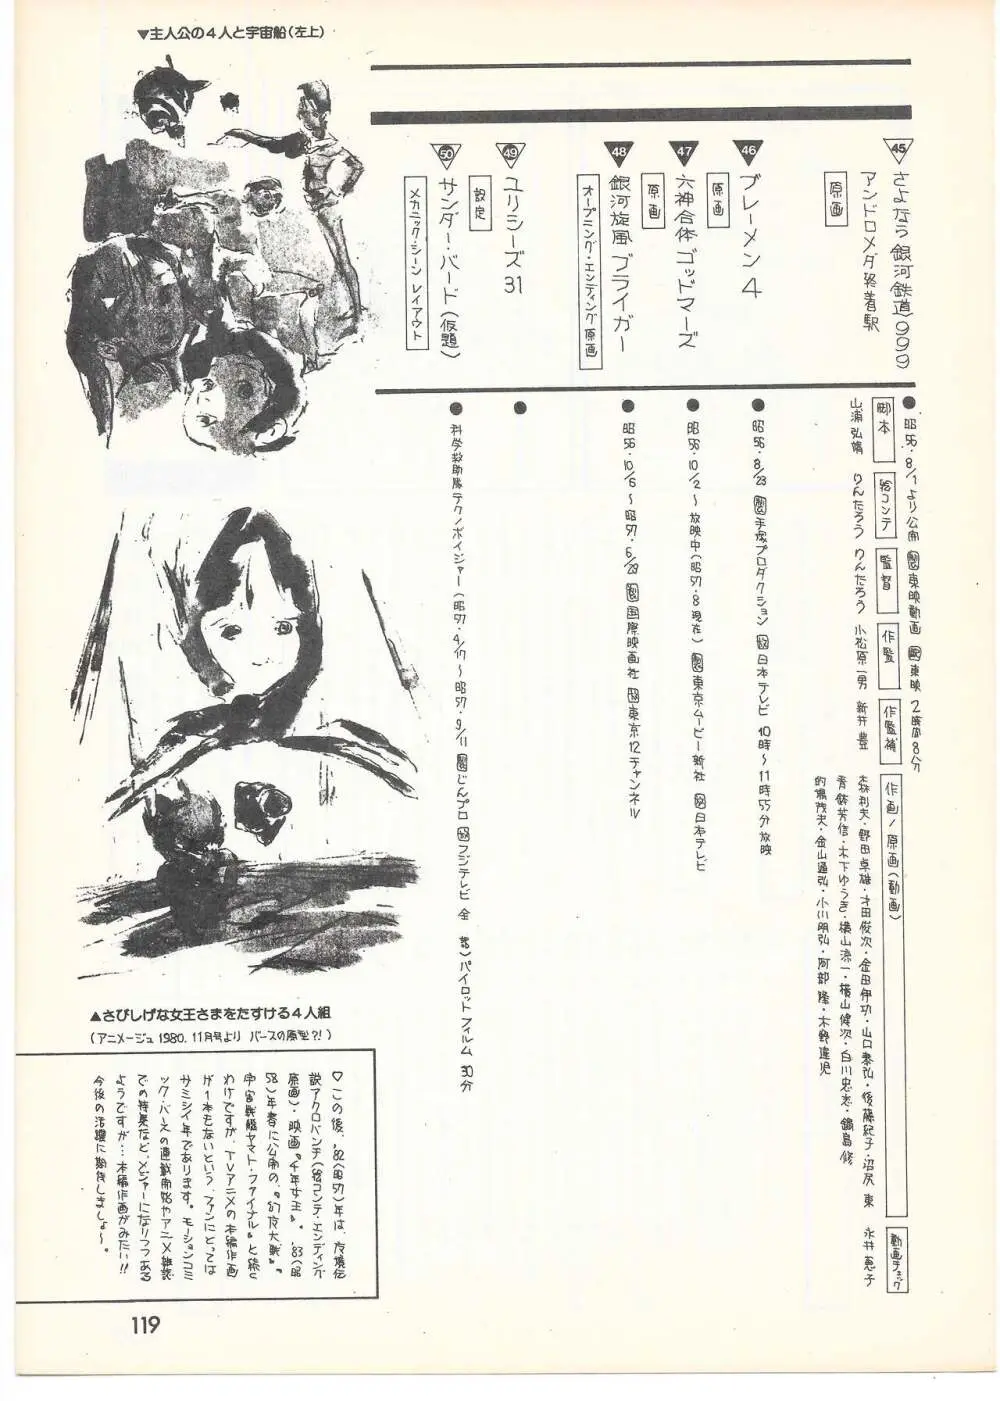 THE ANIMATOR 1 金田伊功特集号 - page114